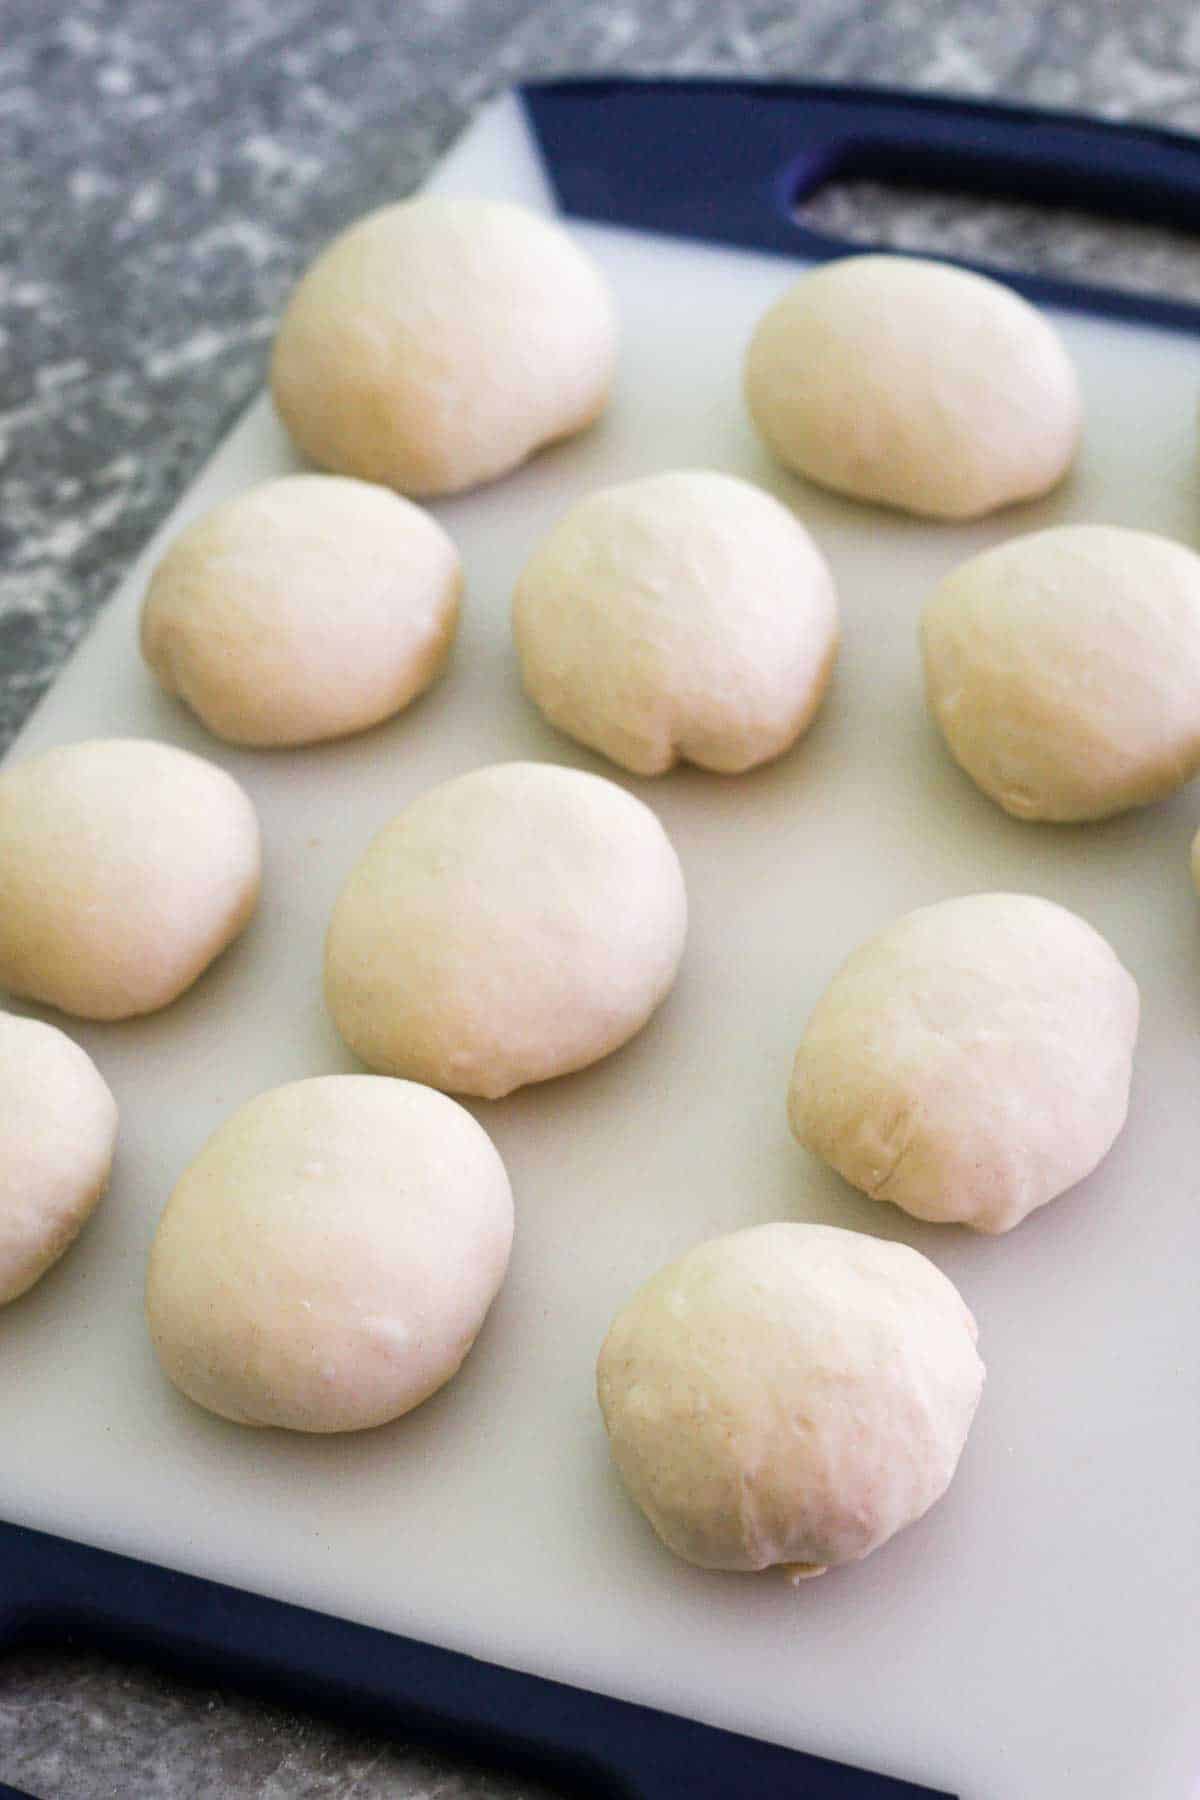 Mini phyllo dough balls kneaded , ready to stretch.